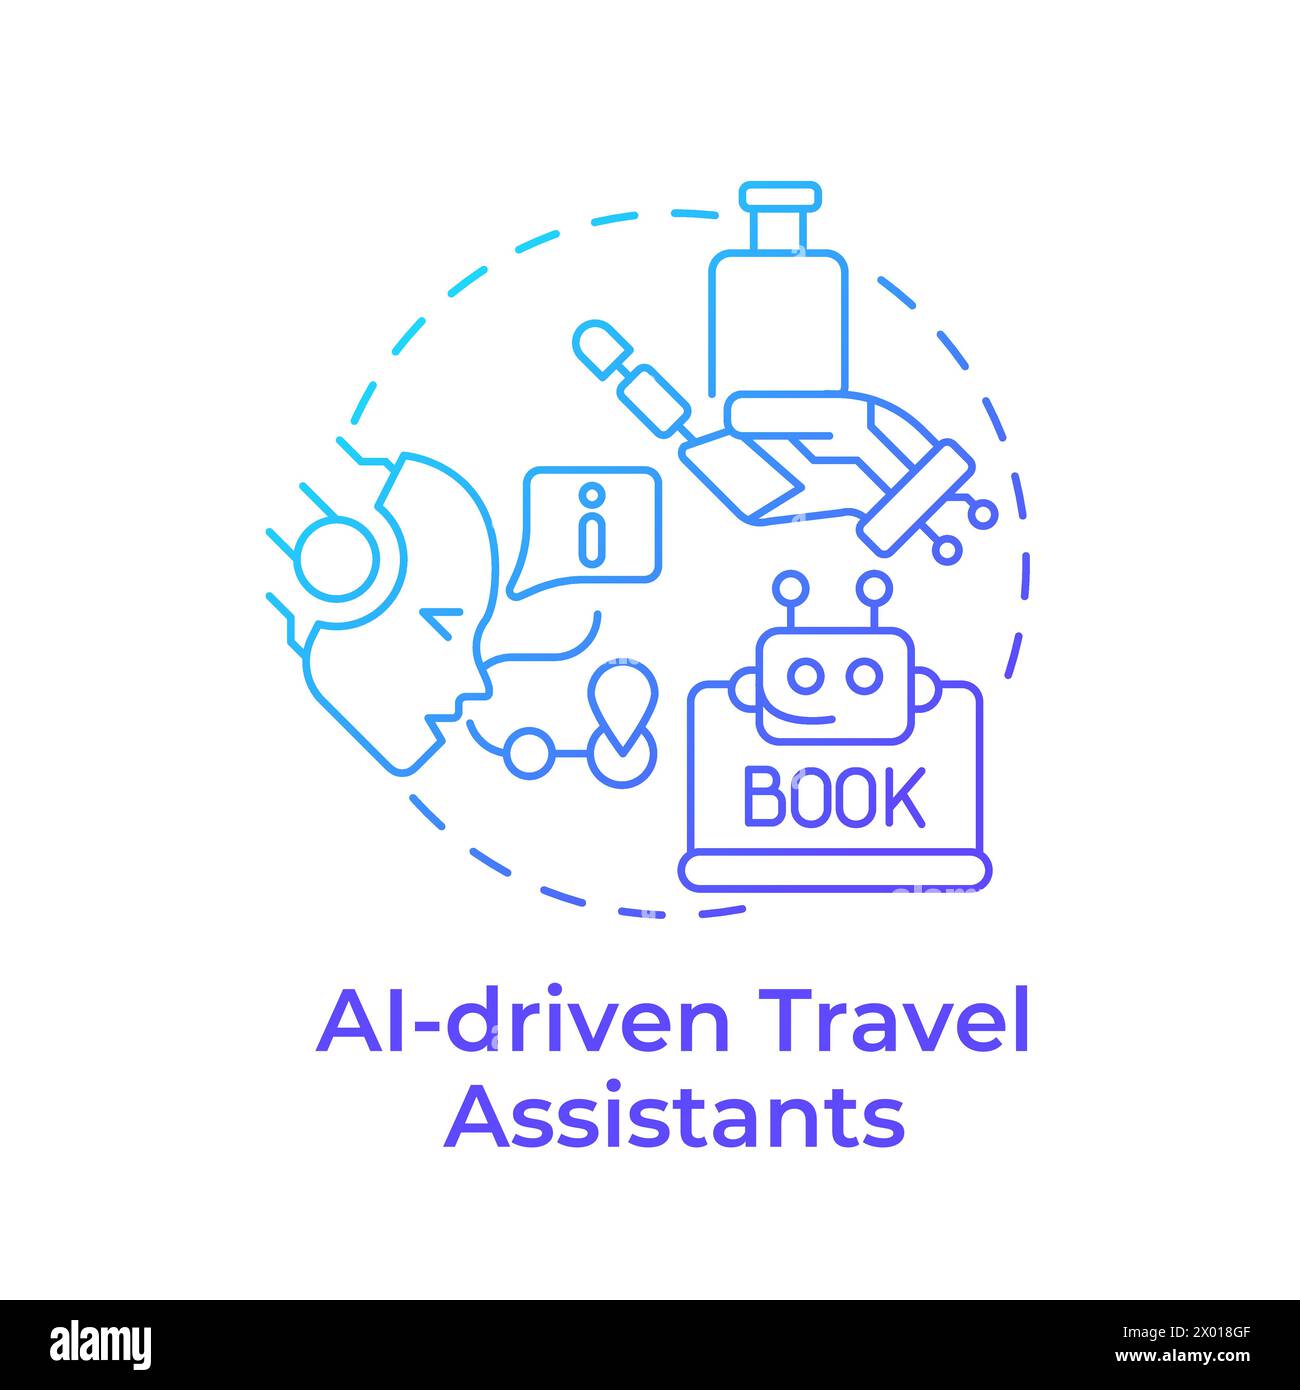 AI-driven travel assistants blue gradient concept icon Stock Vector